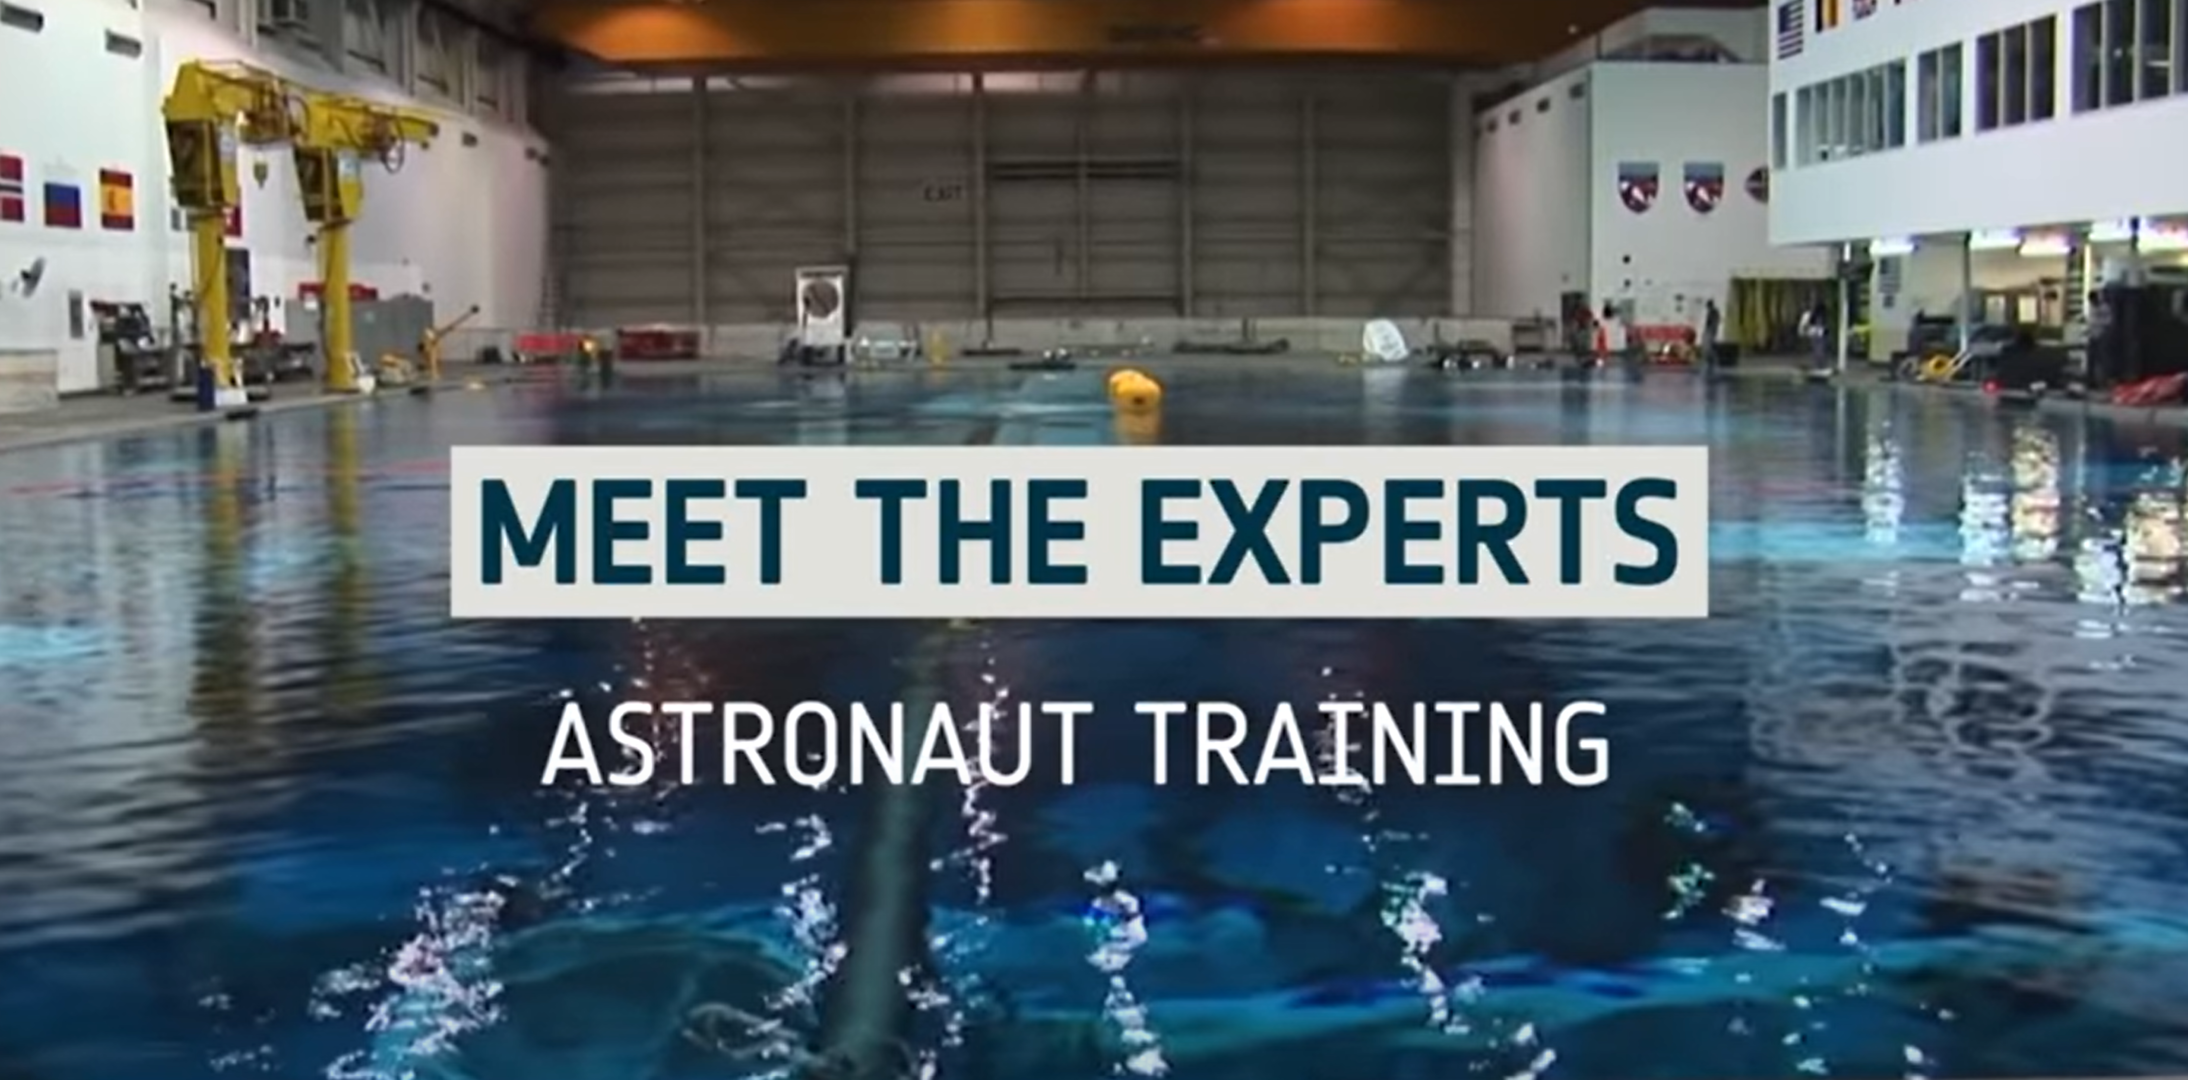 Meet the Experts - Astronaut training